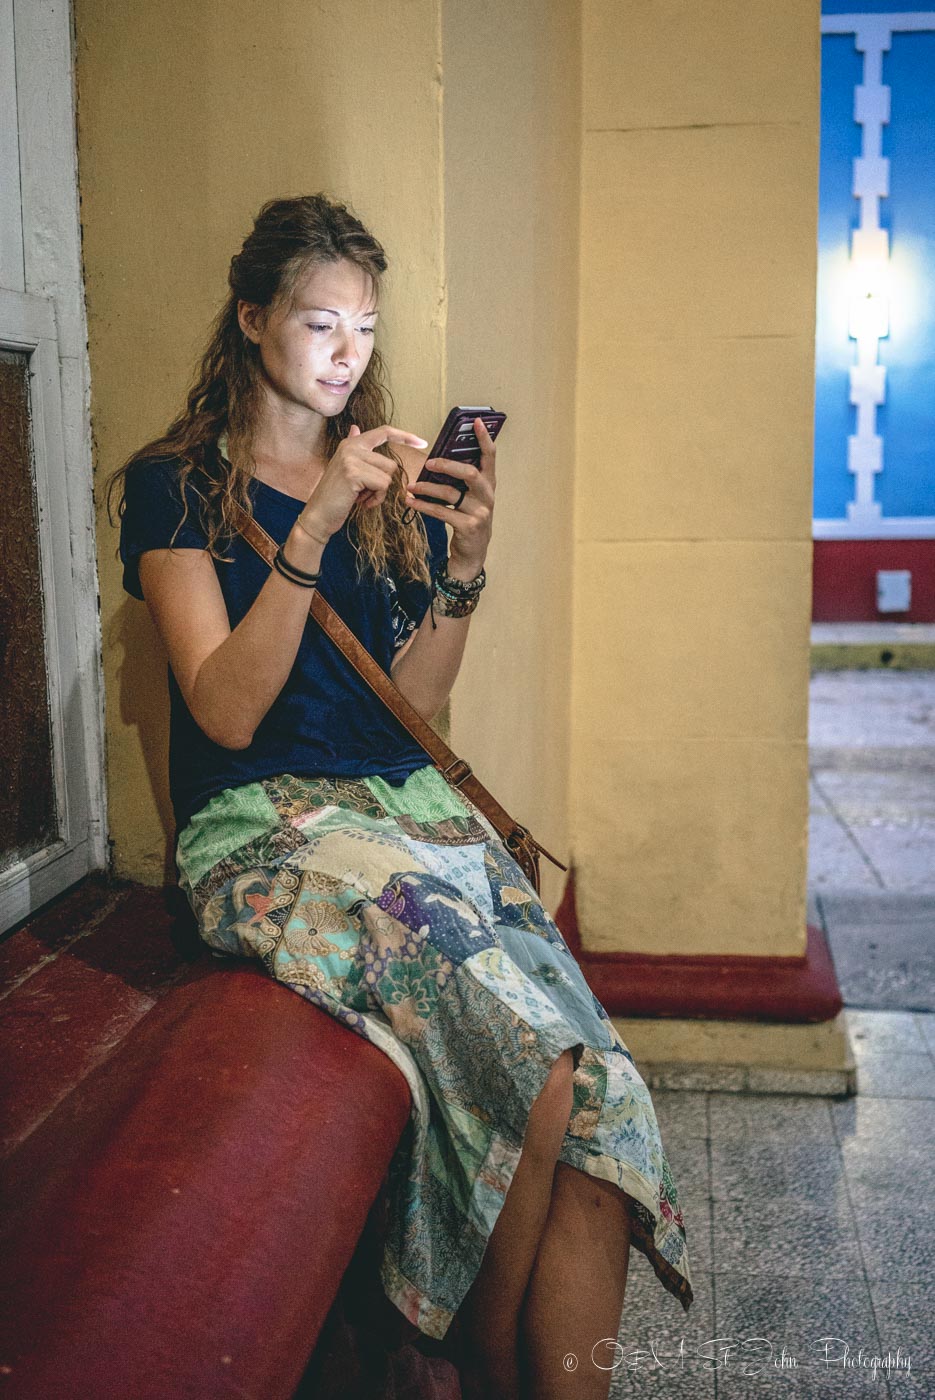 Oksana trying to access the internet in Cuba